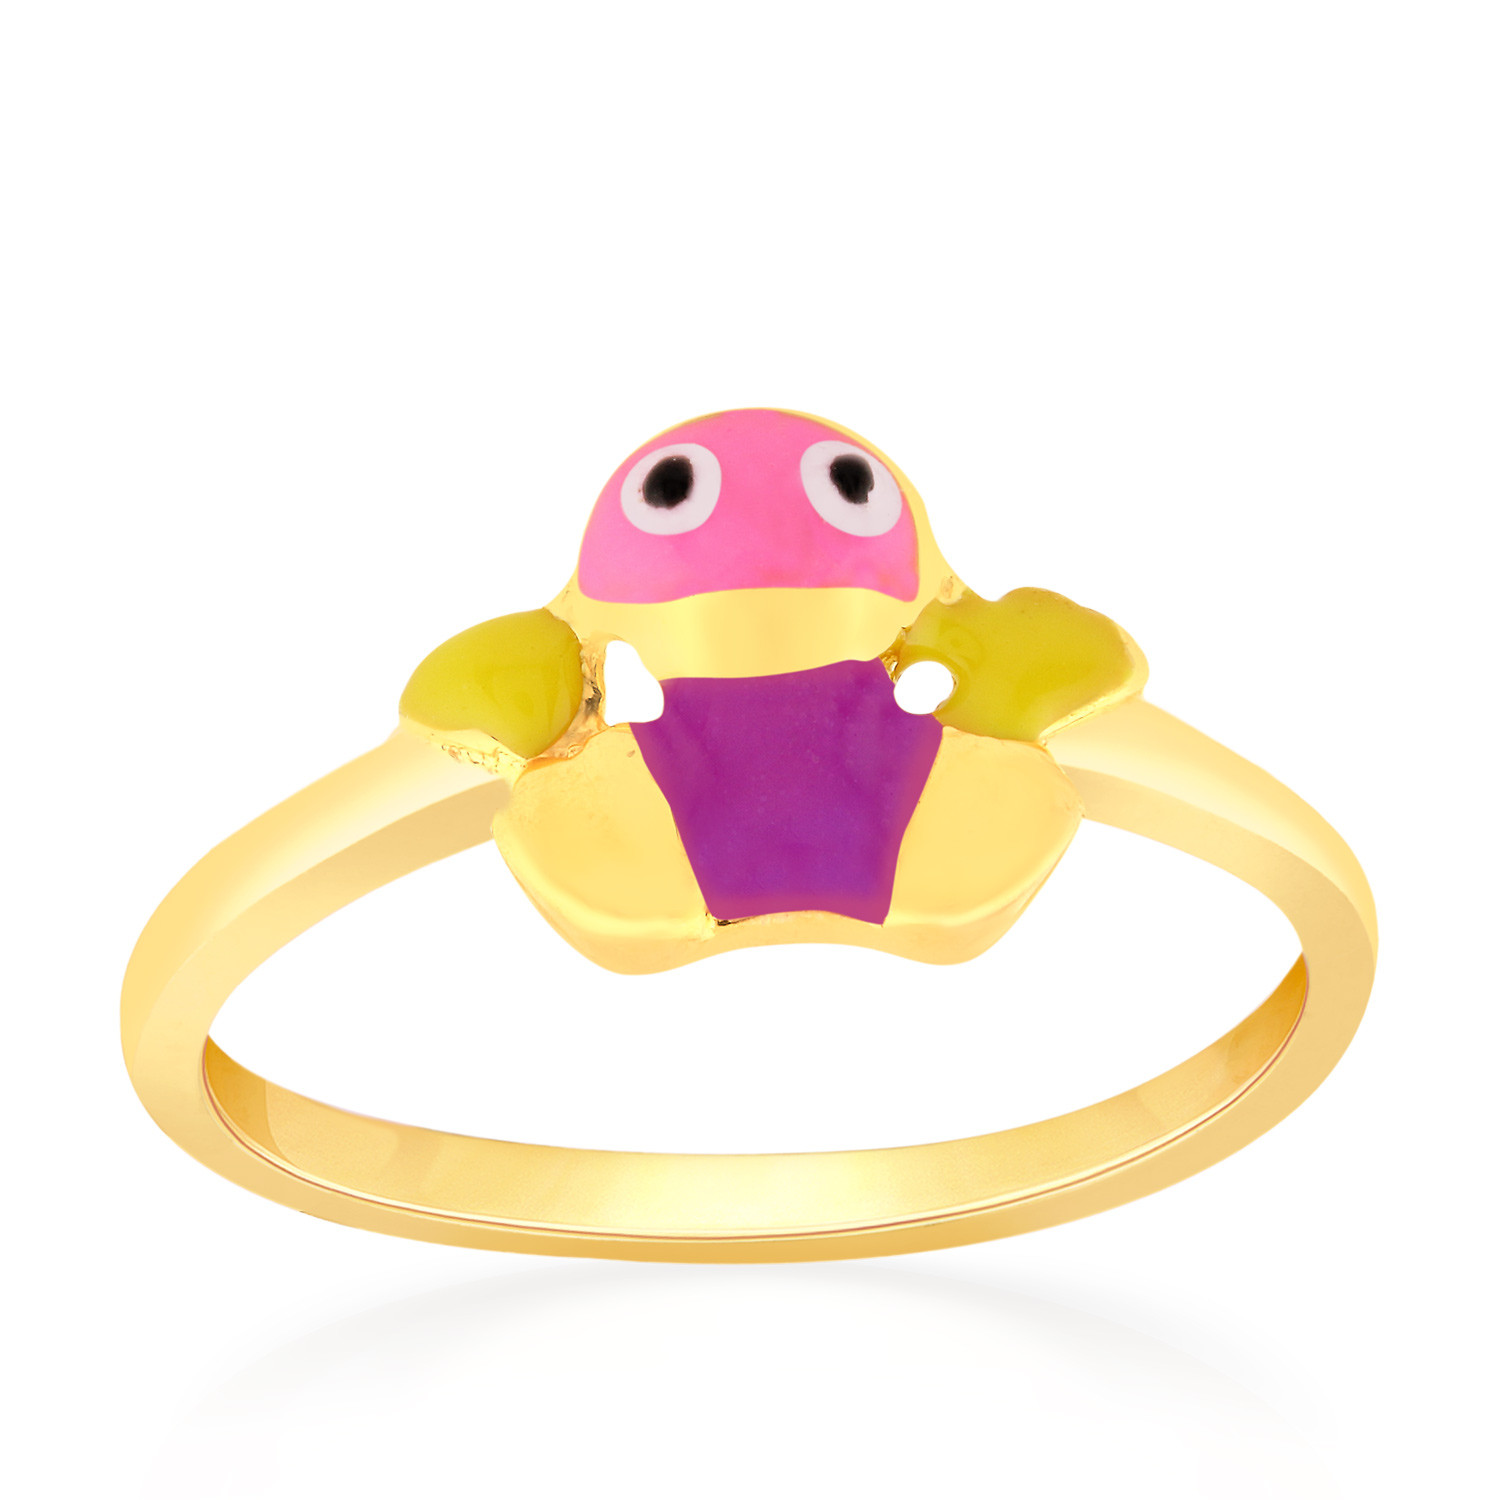 Starlet 22 KT Gold Studded Ring For Kids RGKDNOSG014